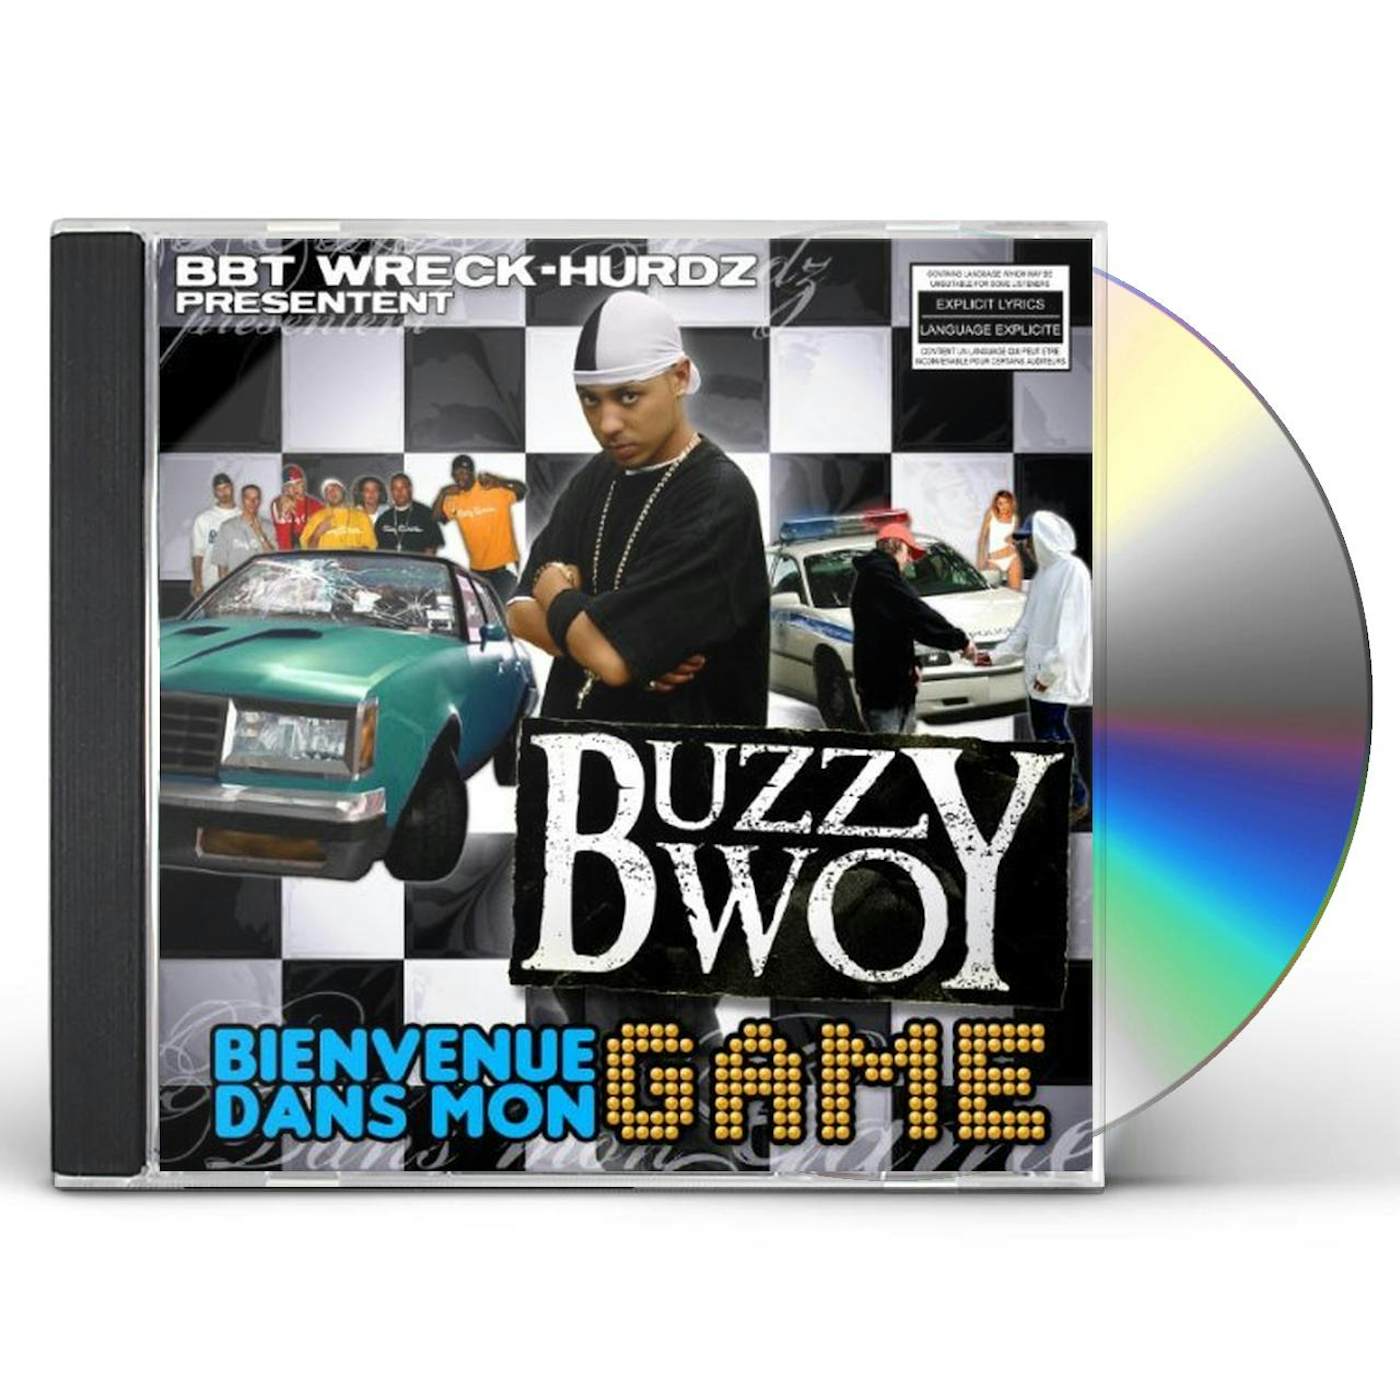 Buzzy Bwoy BIENVENUE DANS MON GAME CD